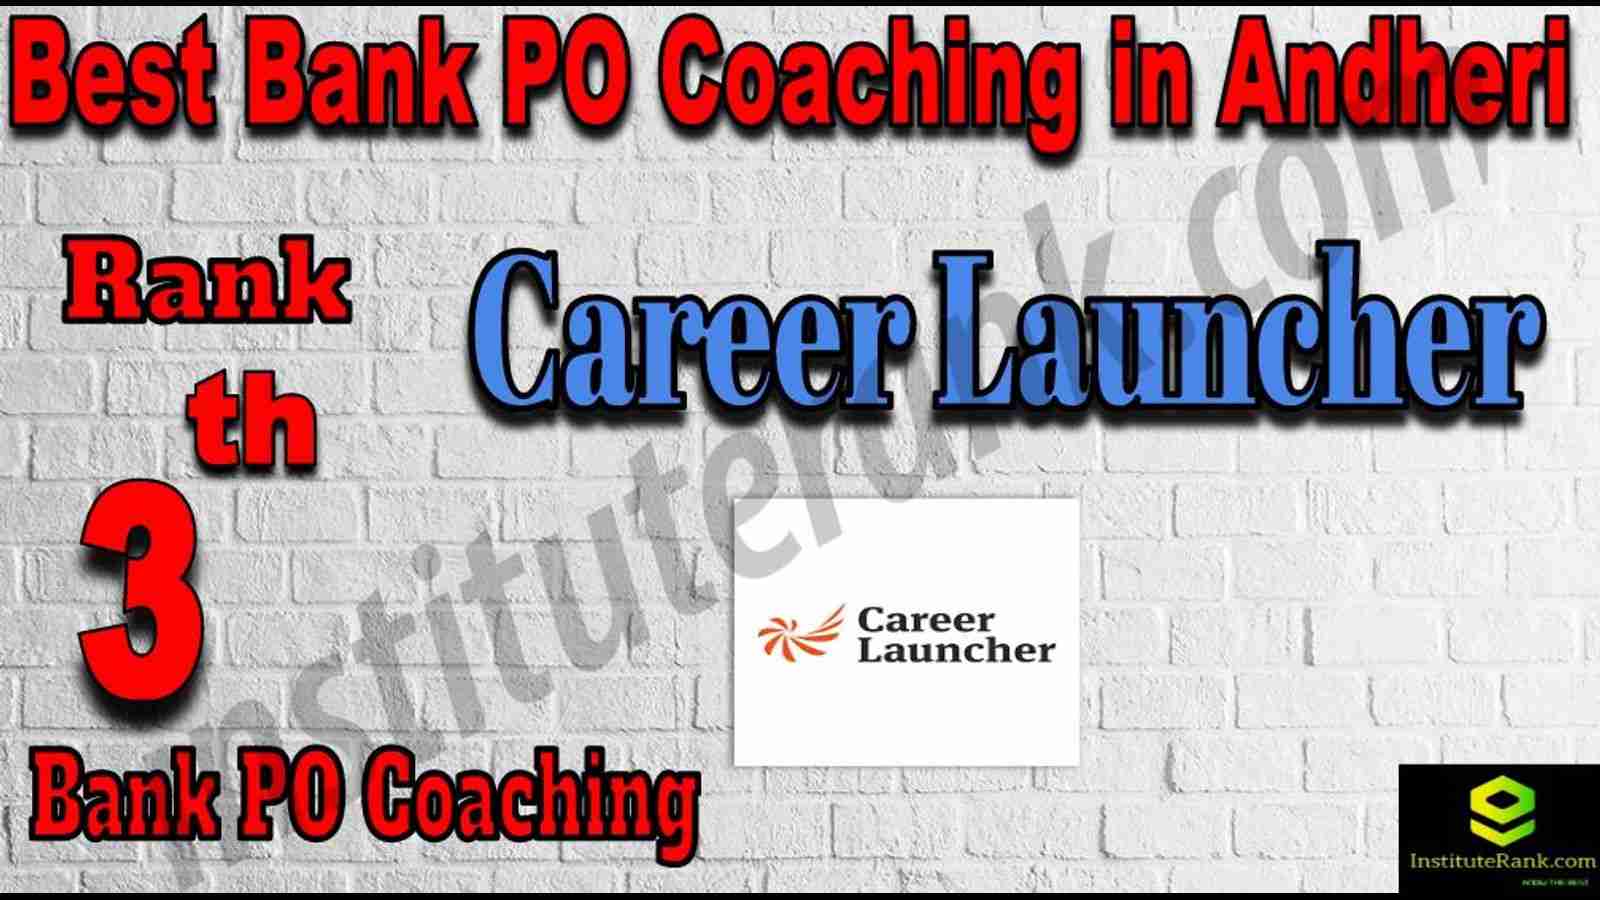 3rd Best Bank PO Coaching in Andheri 